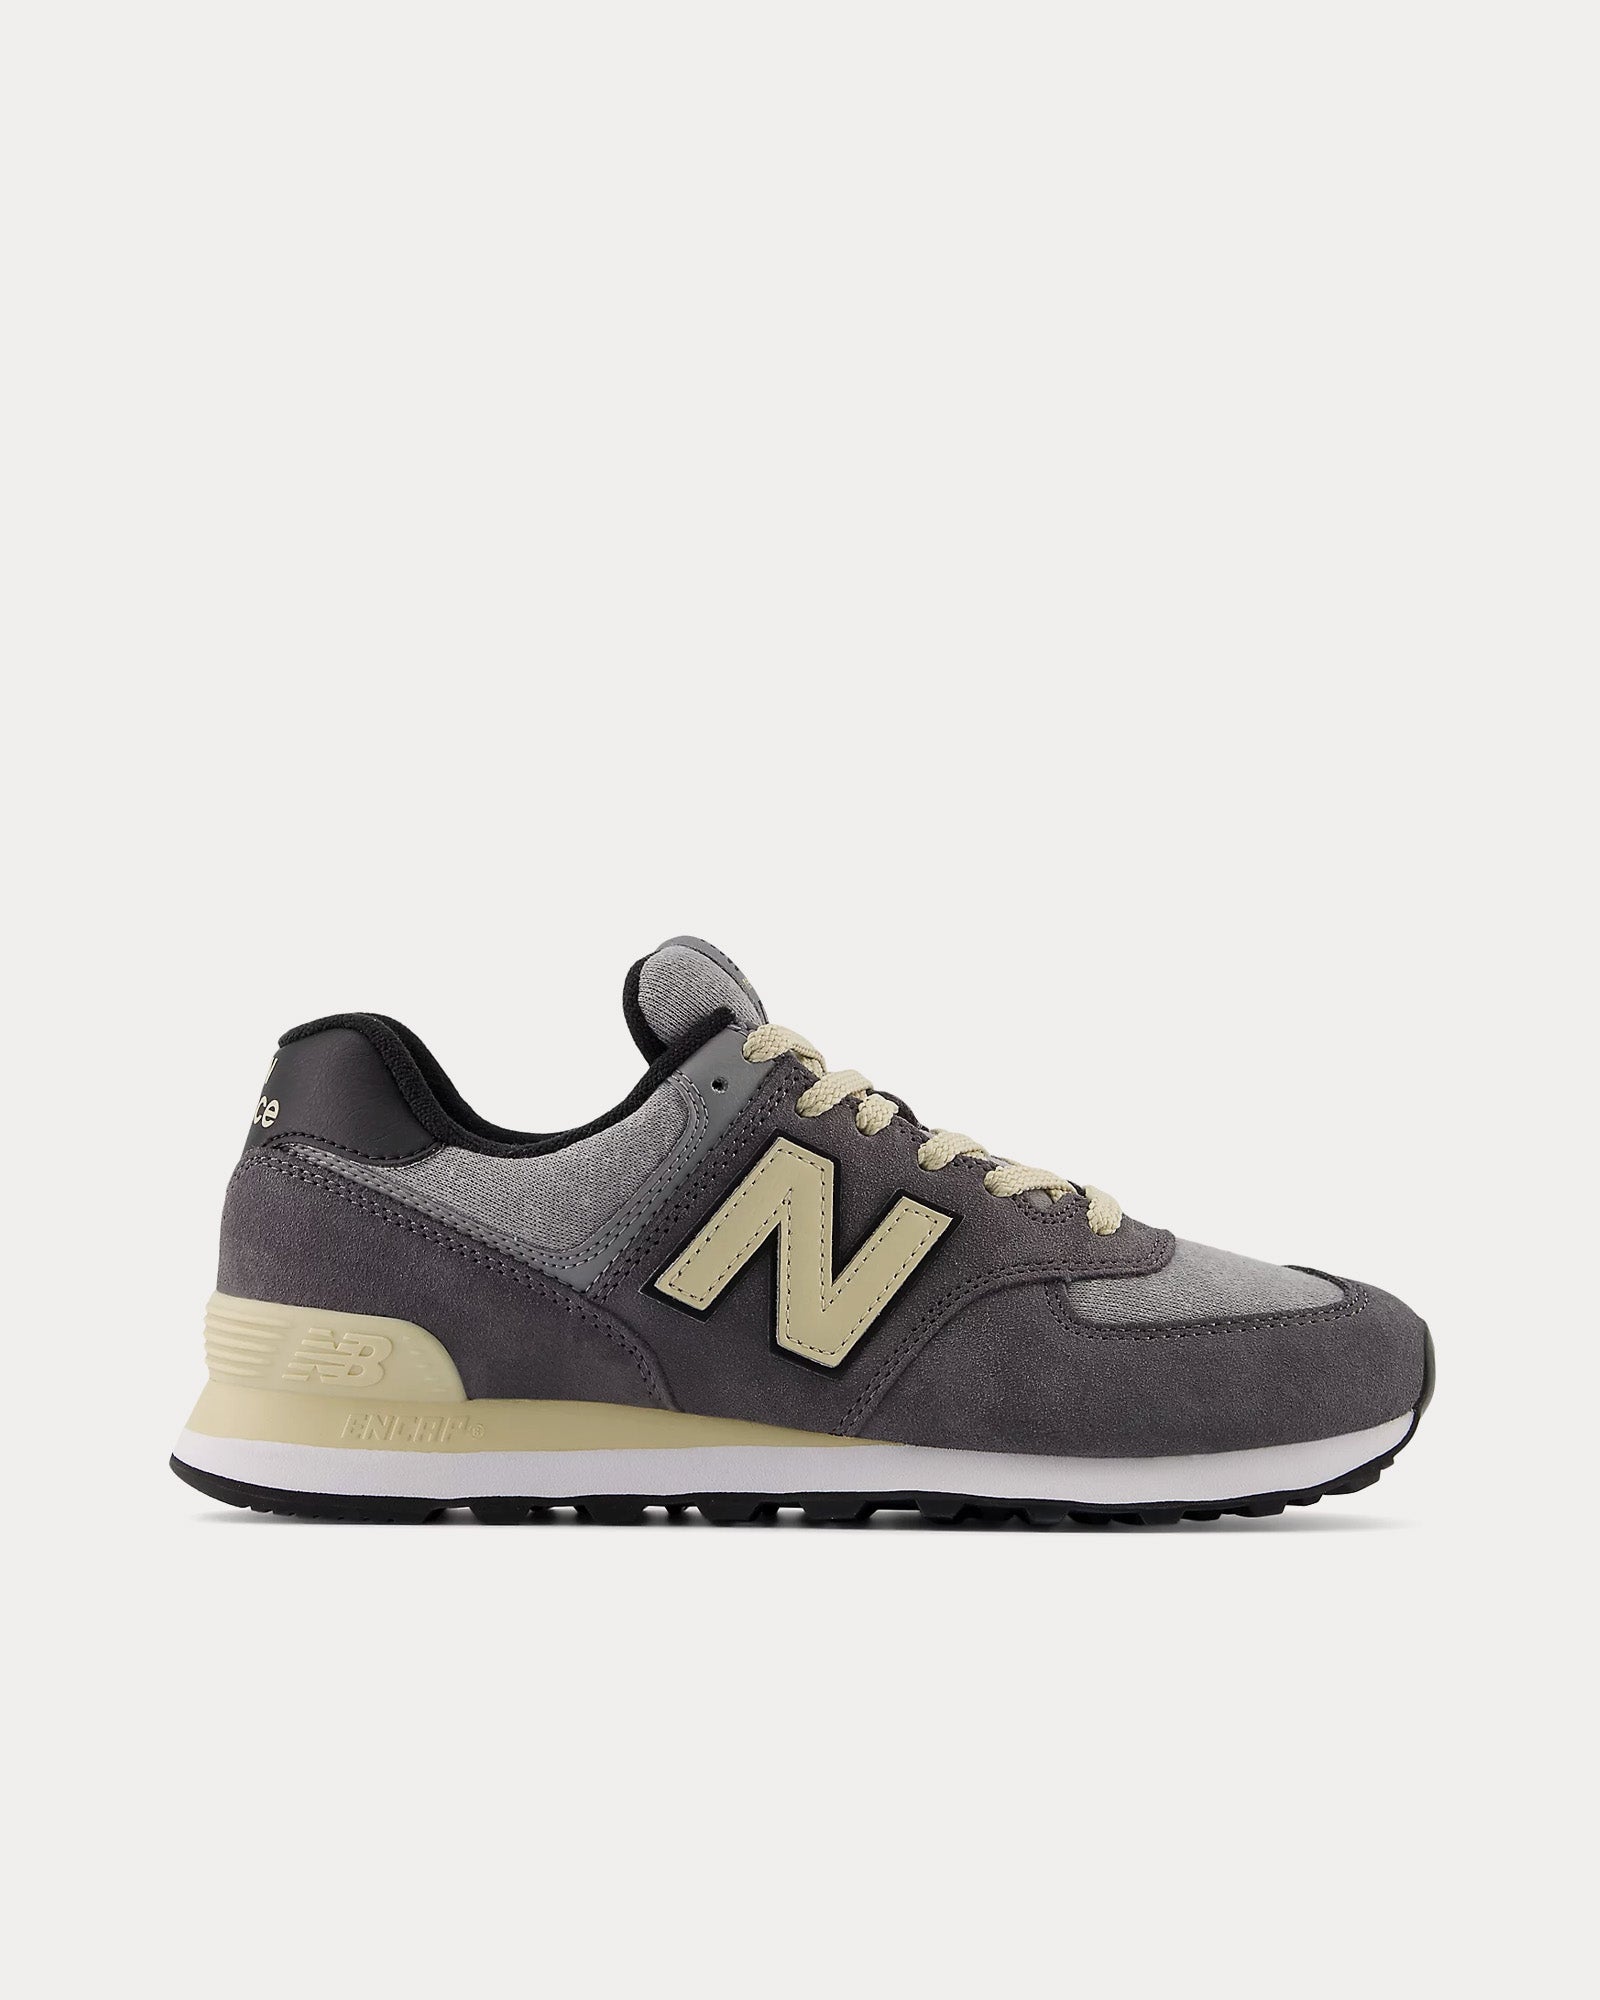 New Balance - 574 Magnet / Sandstone Low Top Sneakers